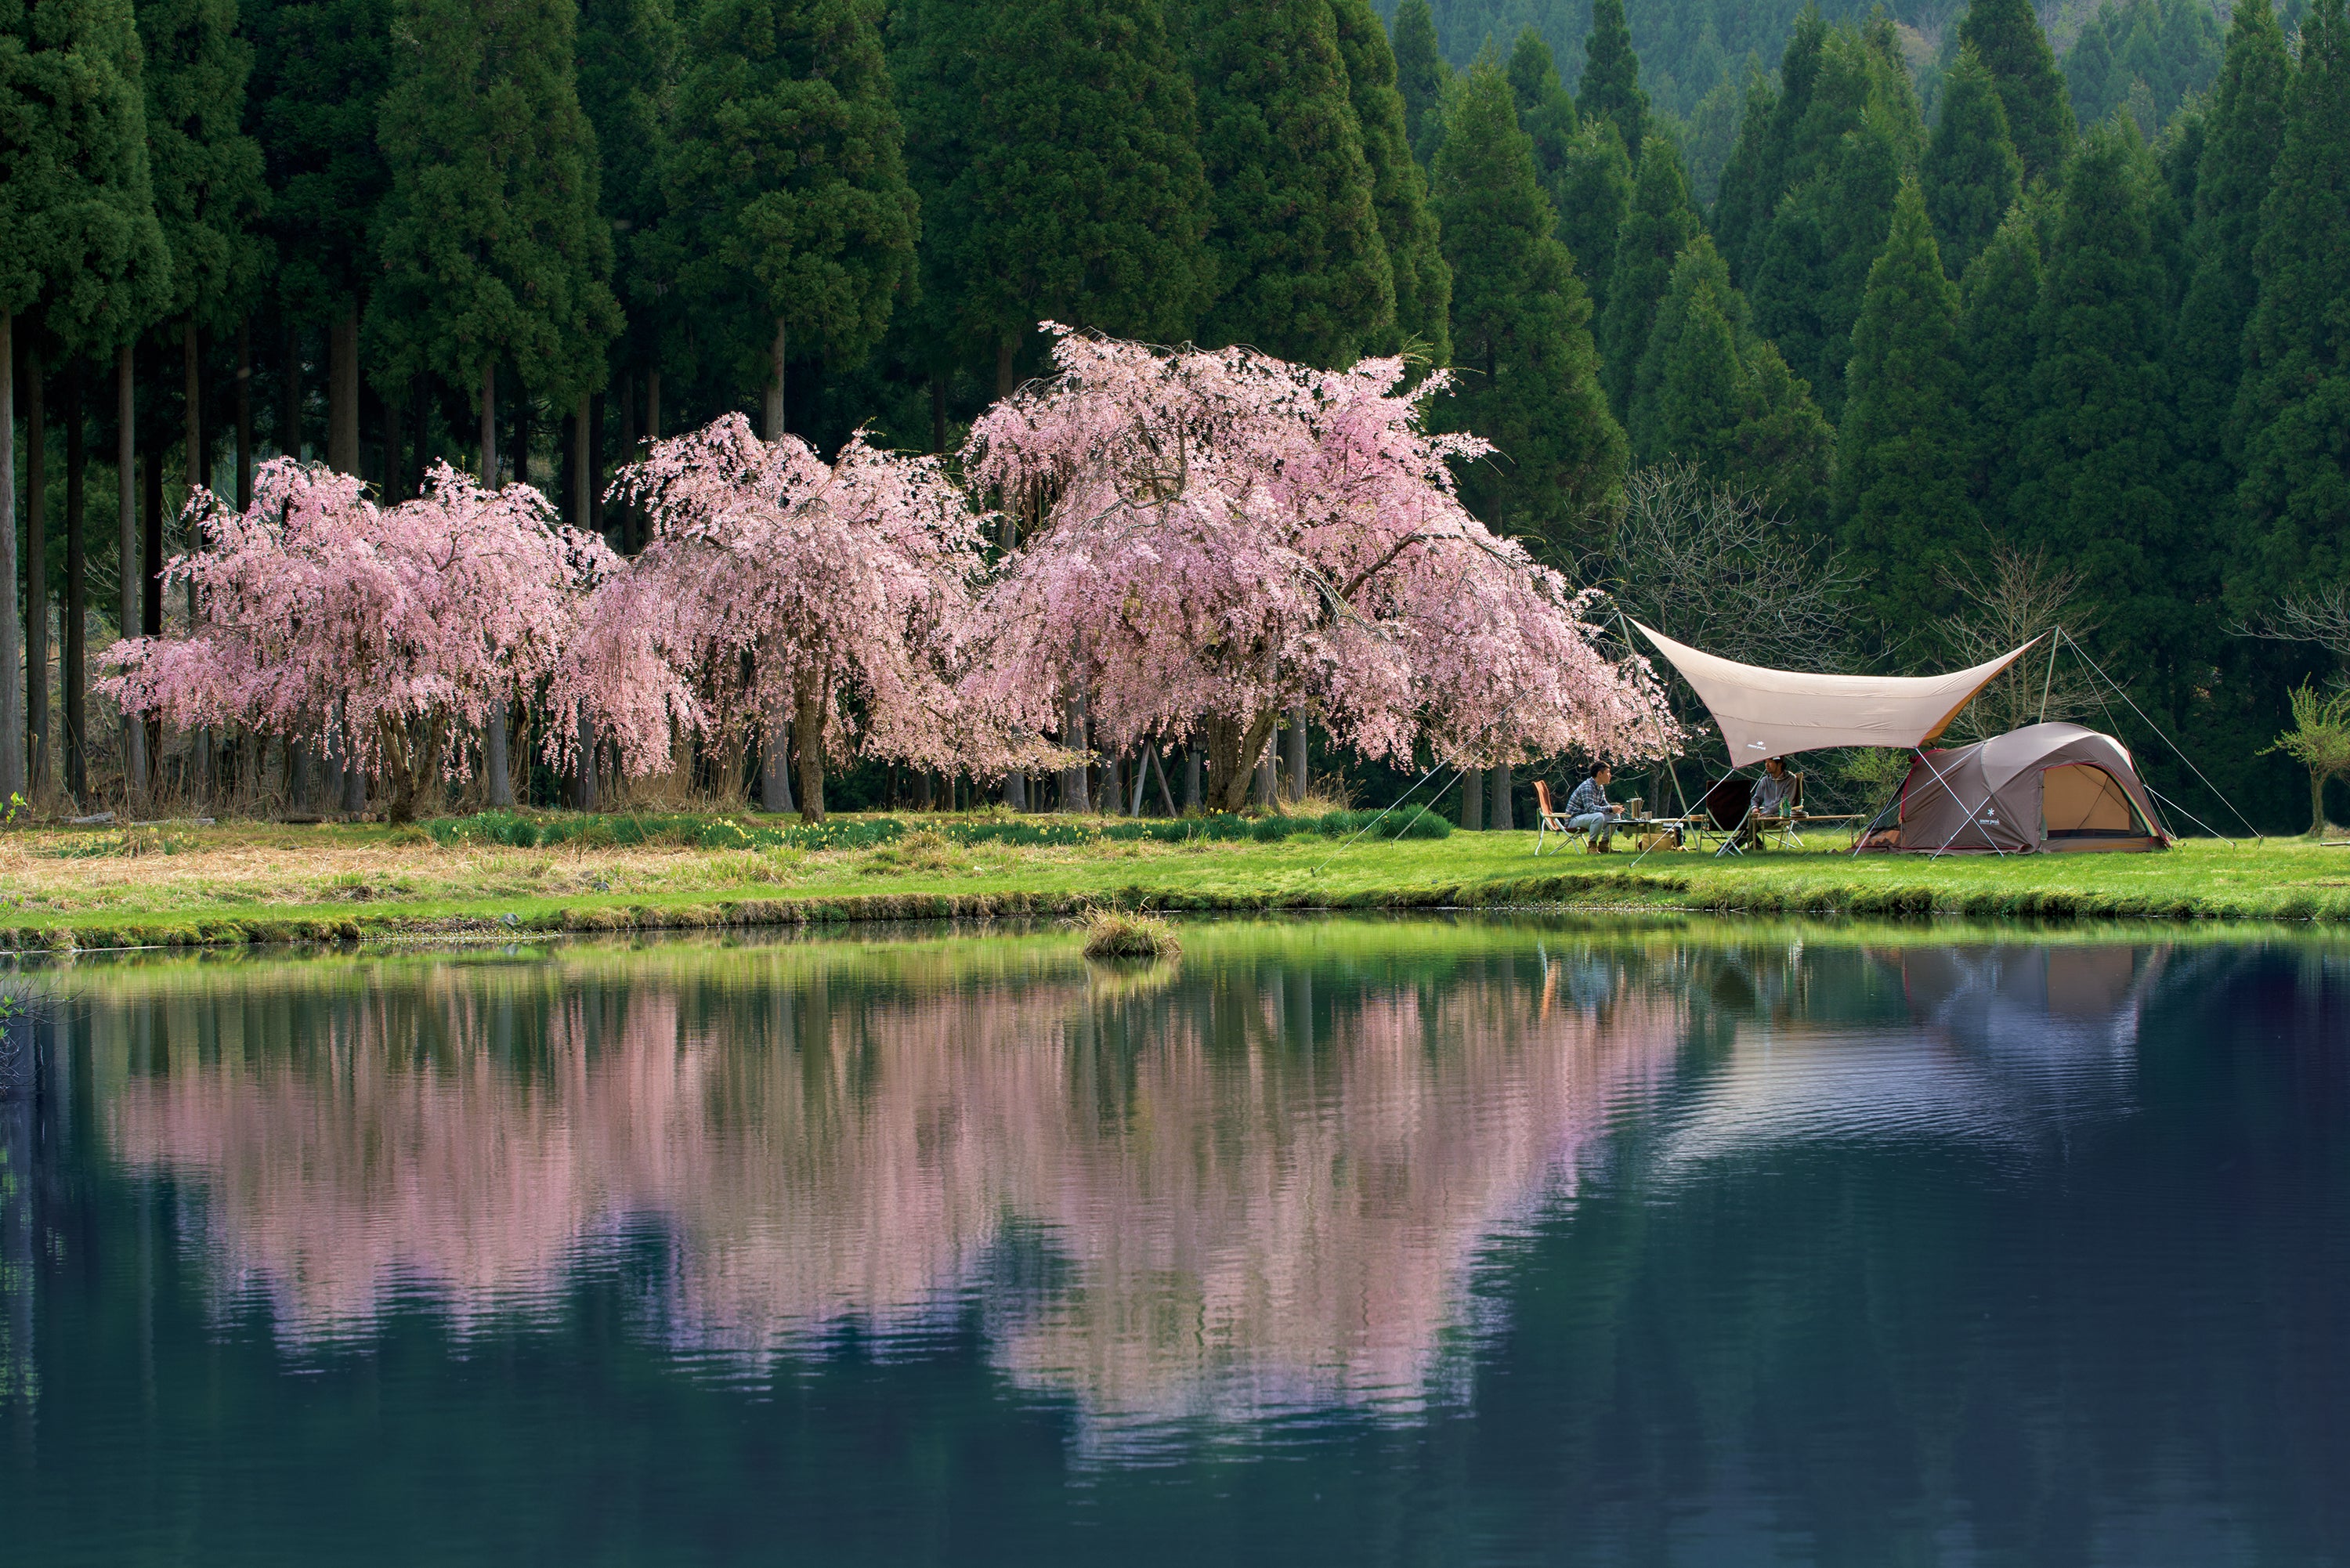 A group of people Snow Peak style camping near a sakura blossom tree. 